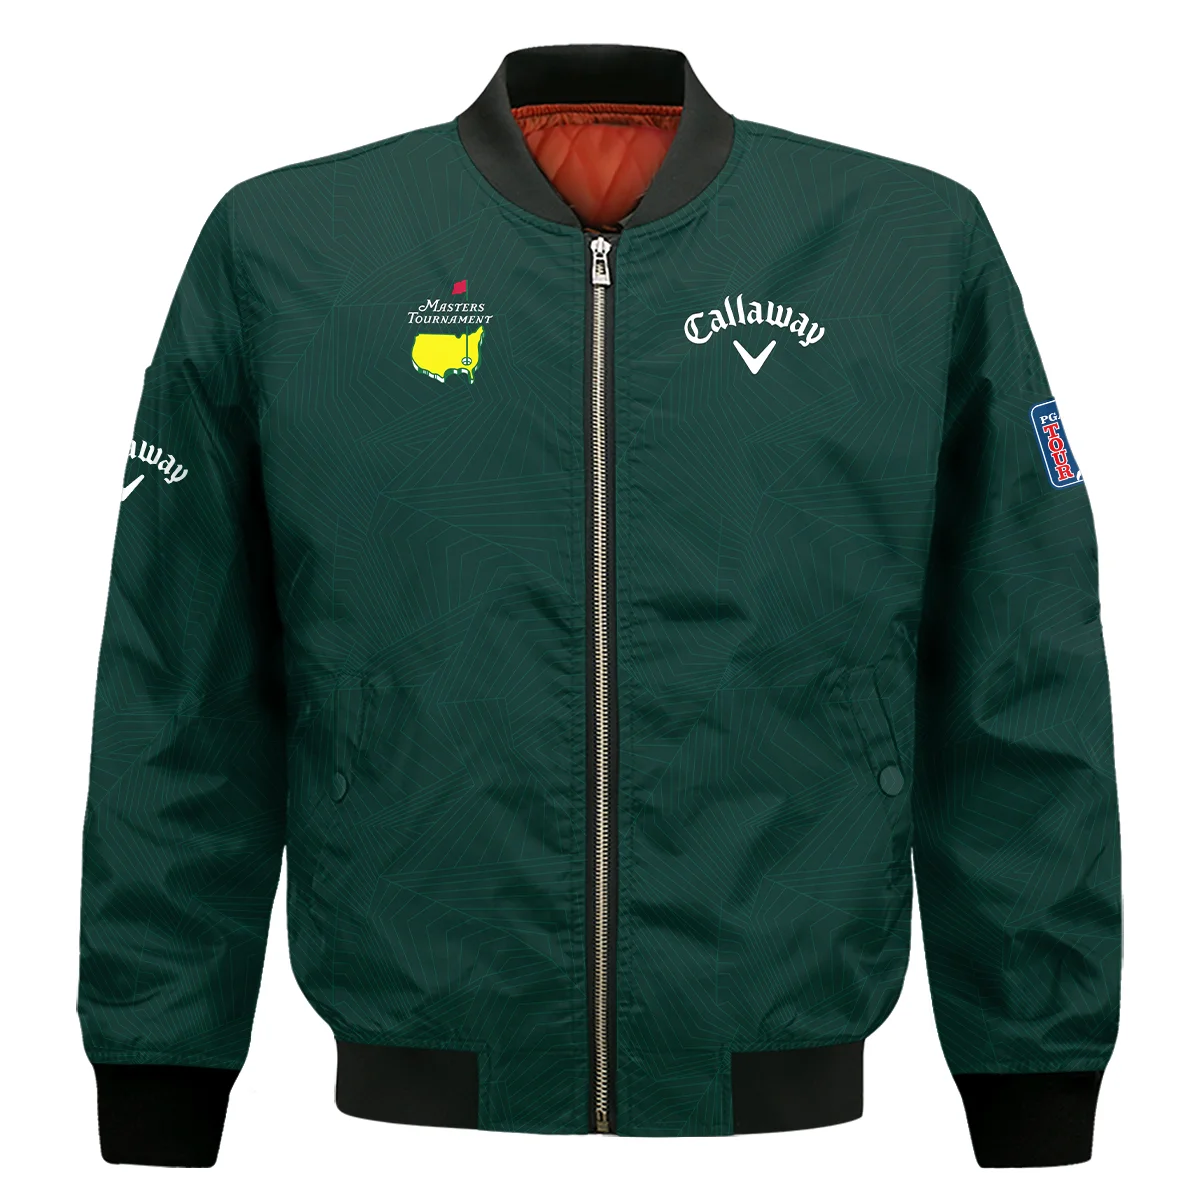 Masters Tournament Callaway Pattern Sport Jersey Dark Green Bomber Jacket Style Classic Bomber Jacket